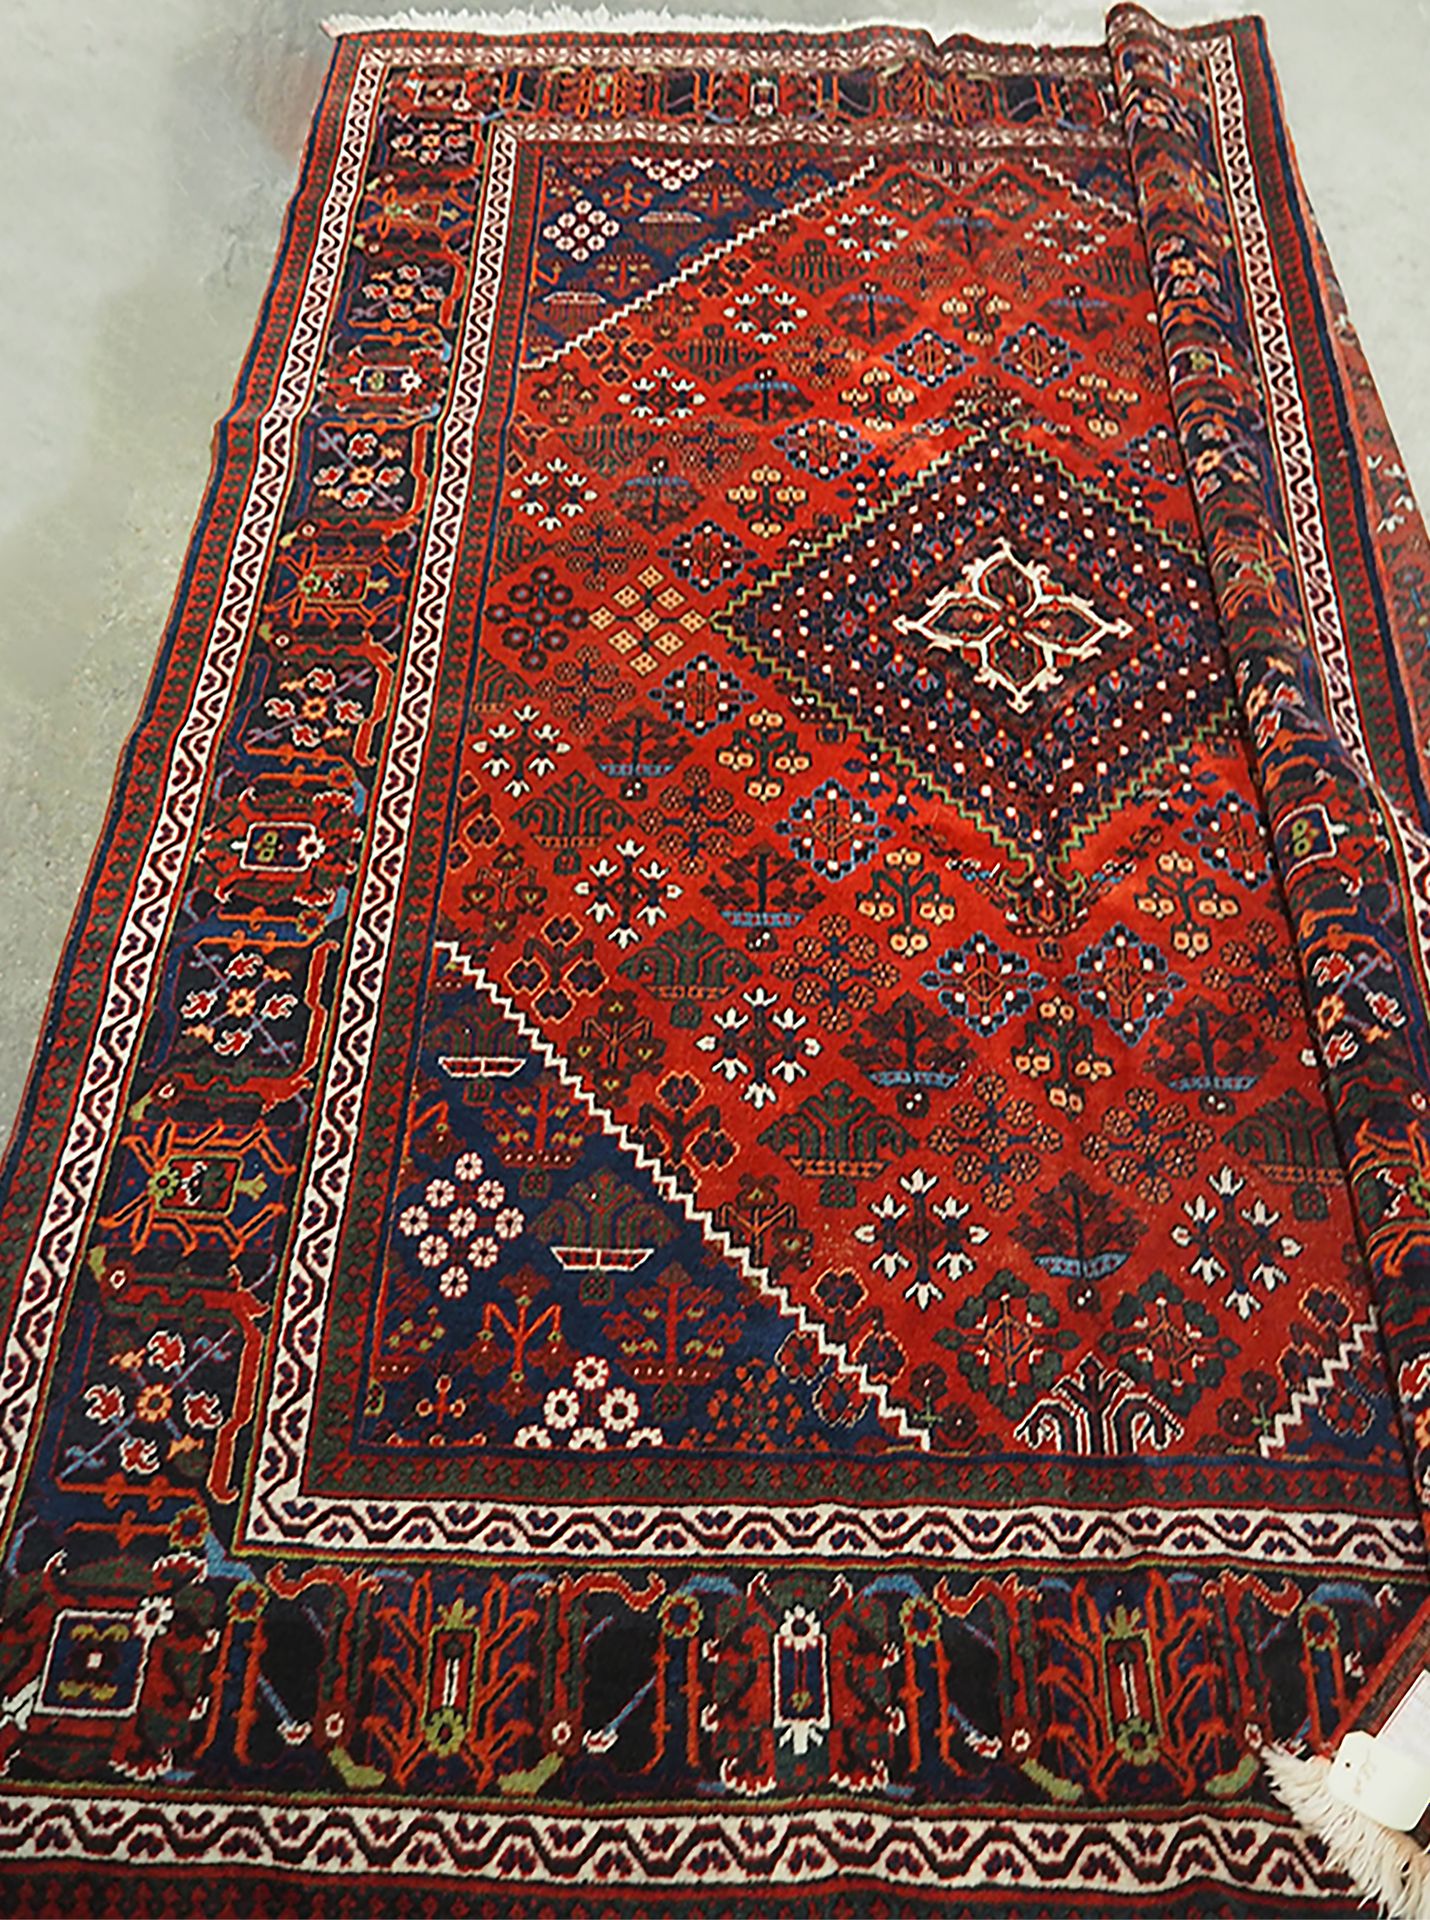 Null 大型Djochagan Morchekor - 伊朗

约1975年

尺寸: 341 x 251 cm

棉质基础上的羊毛丝绒

状况良好

红宝石&hellip;